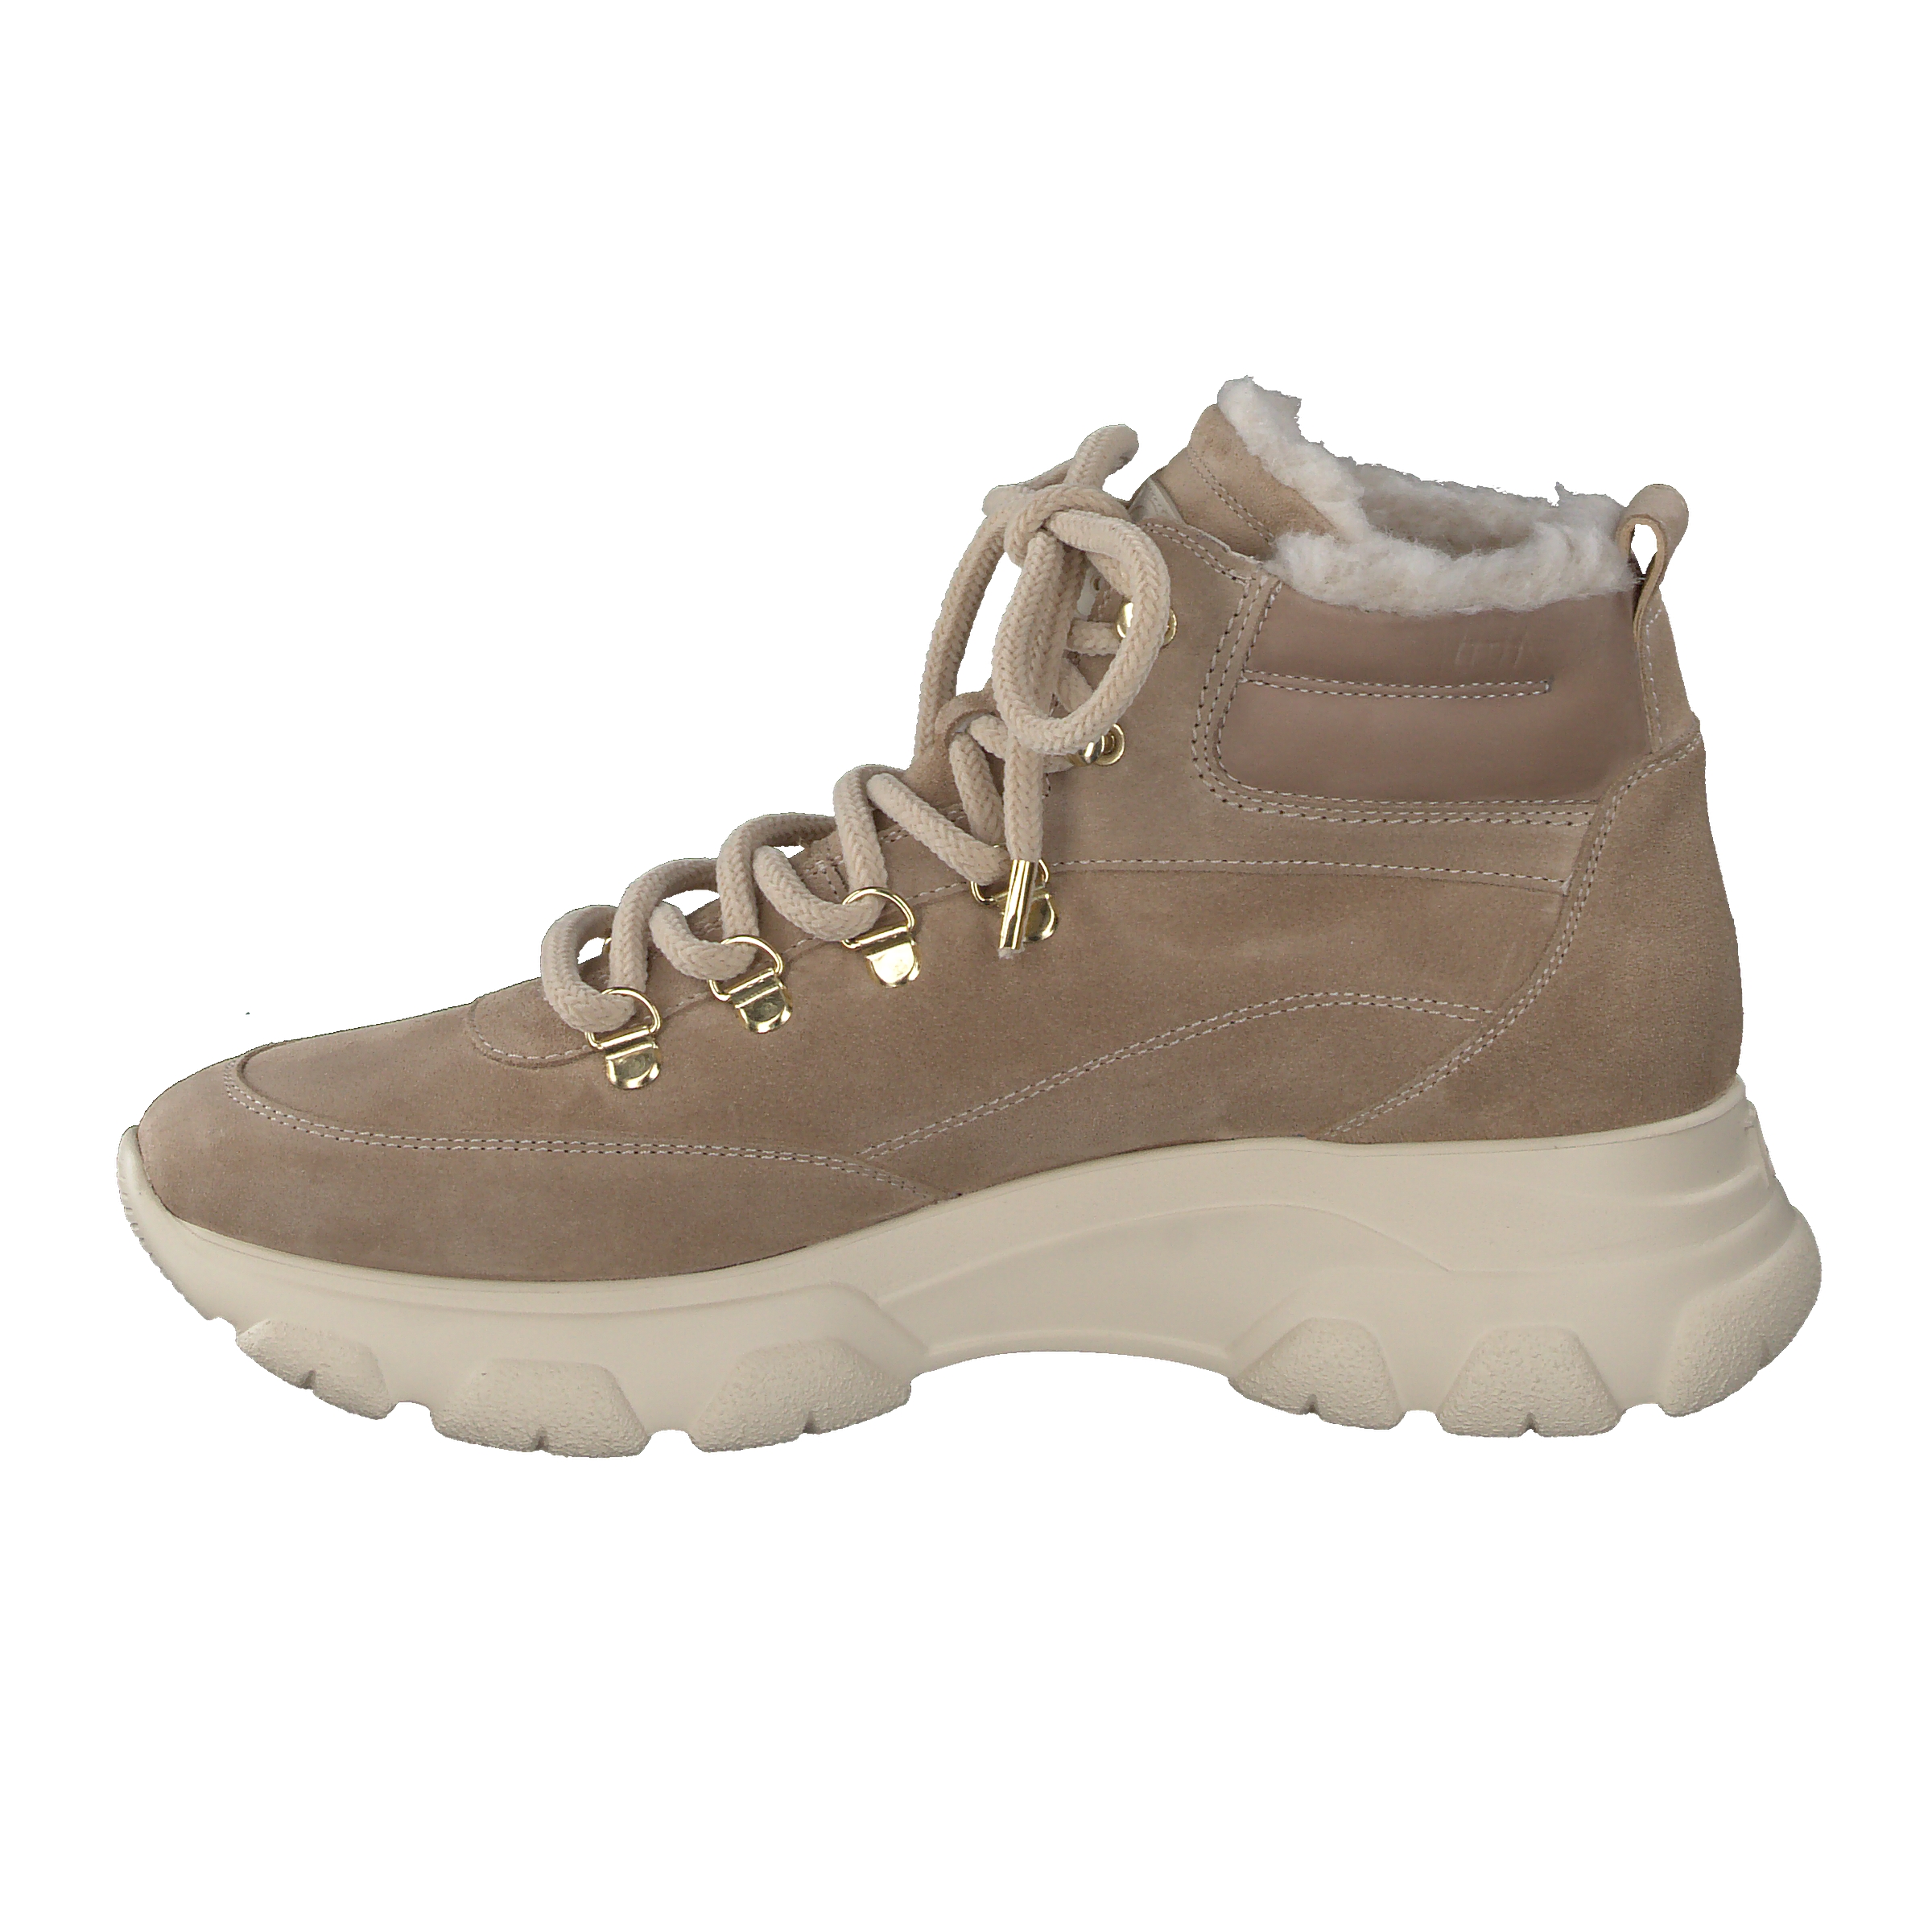 Paul Green Hightop-Sneaker - Beige suede leather